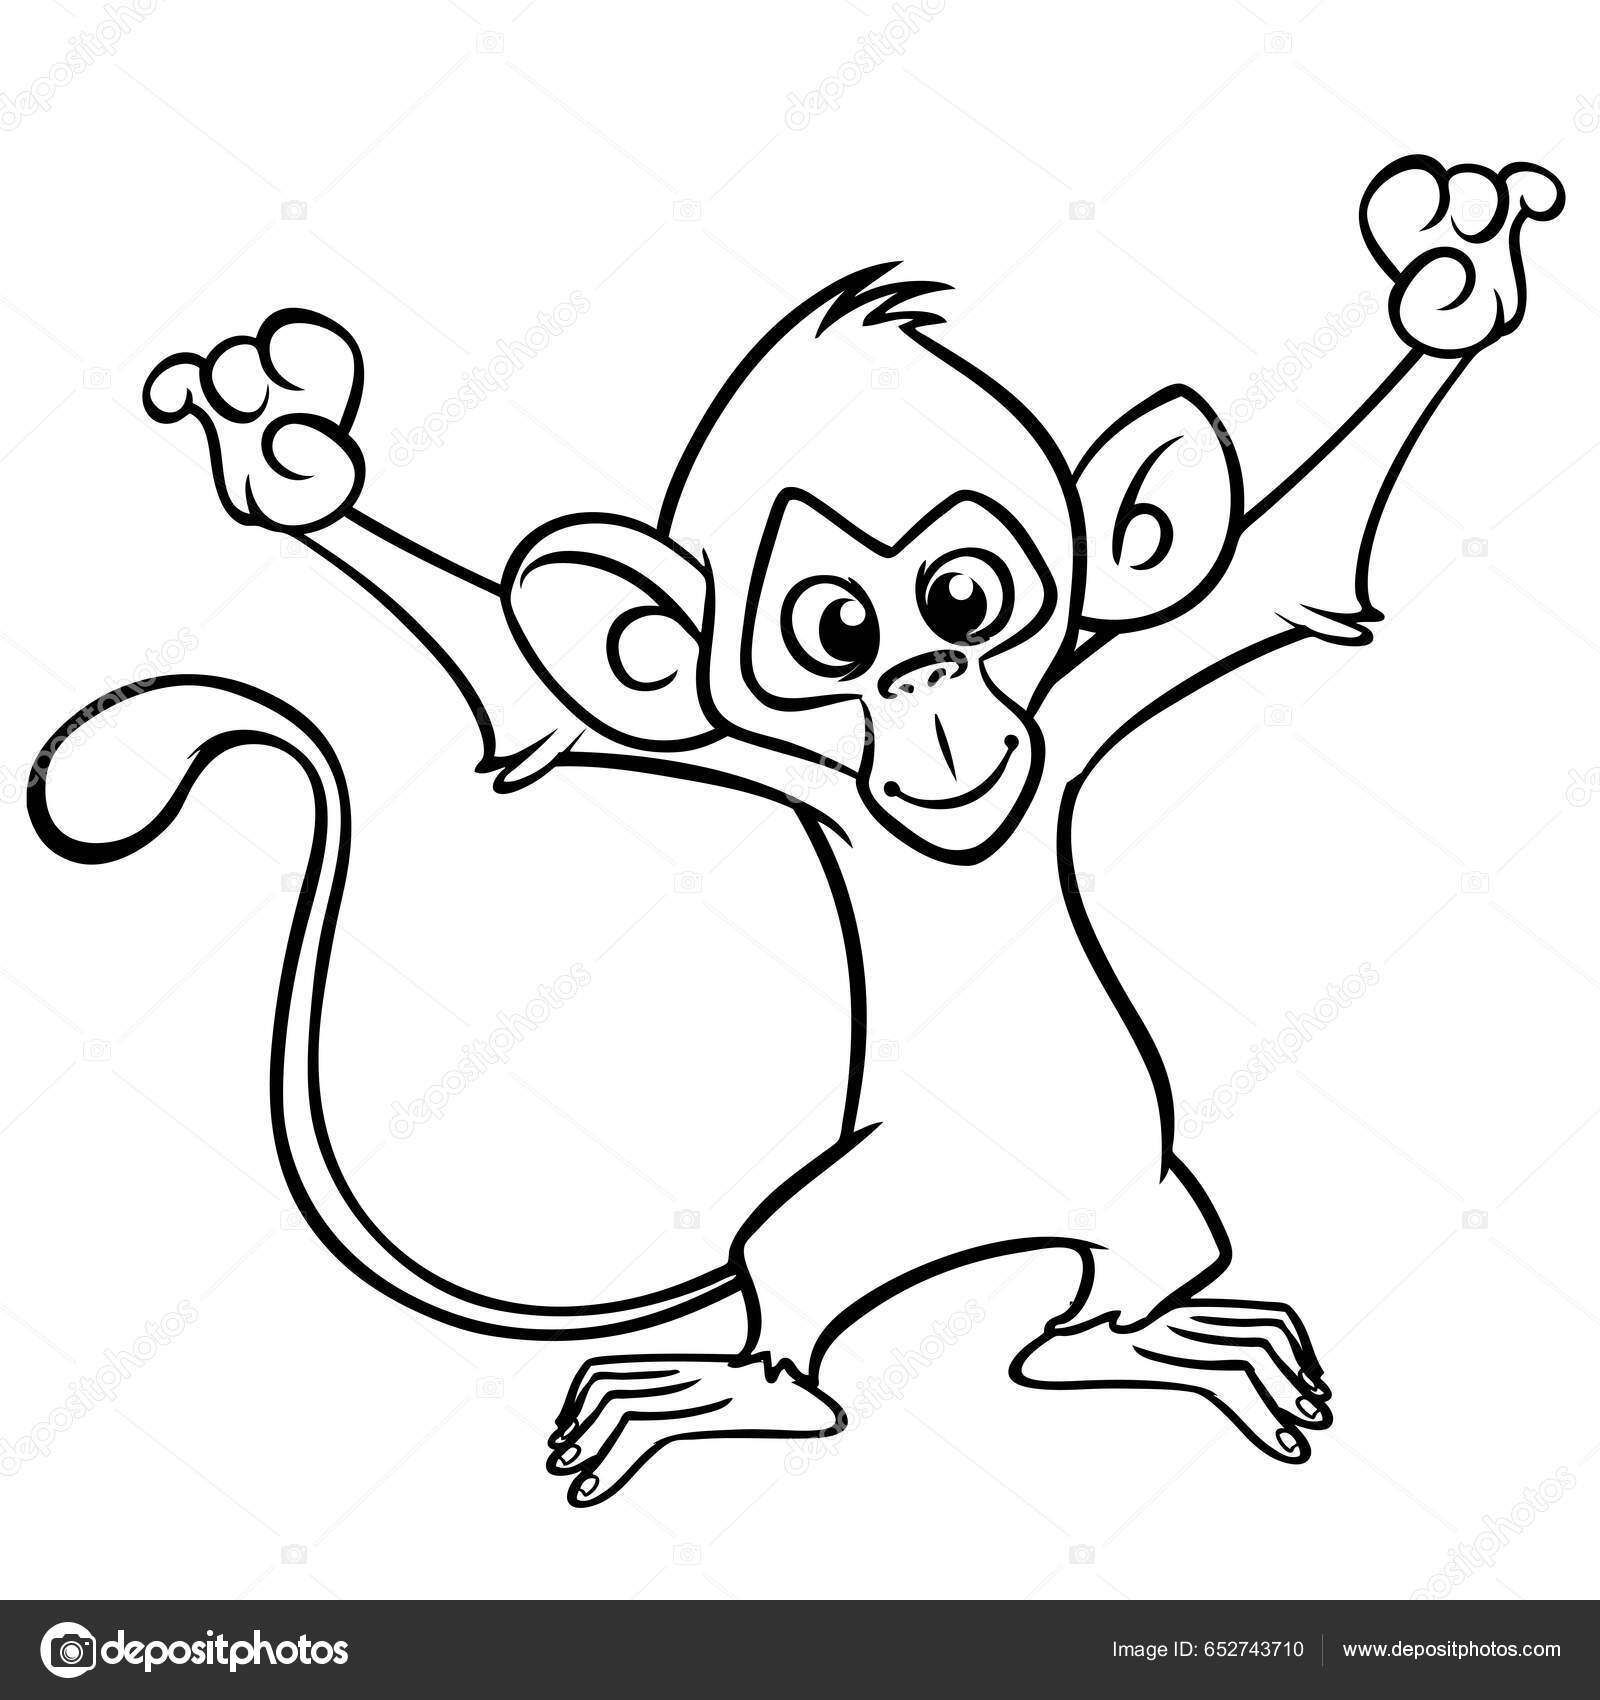 Macaco alegre para colorir - Imprimir Desenhos